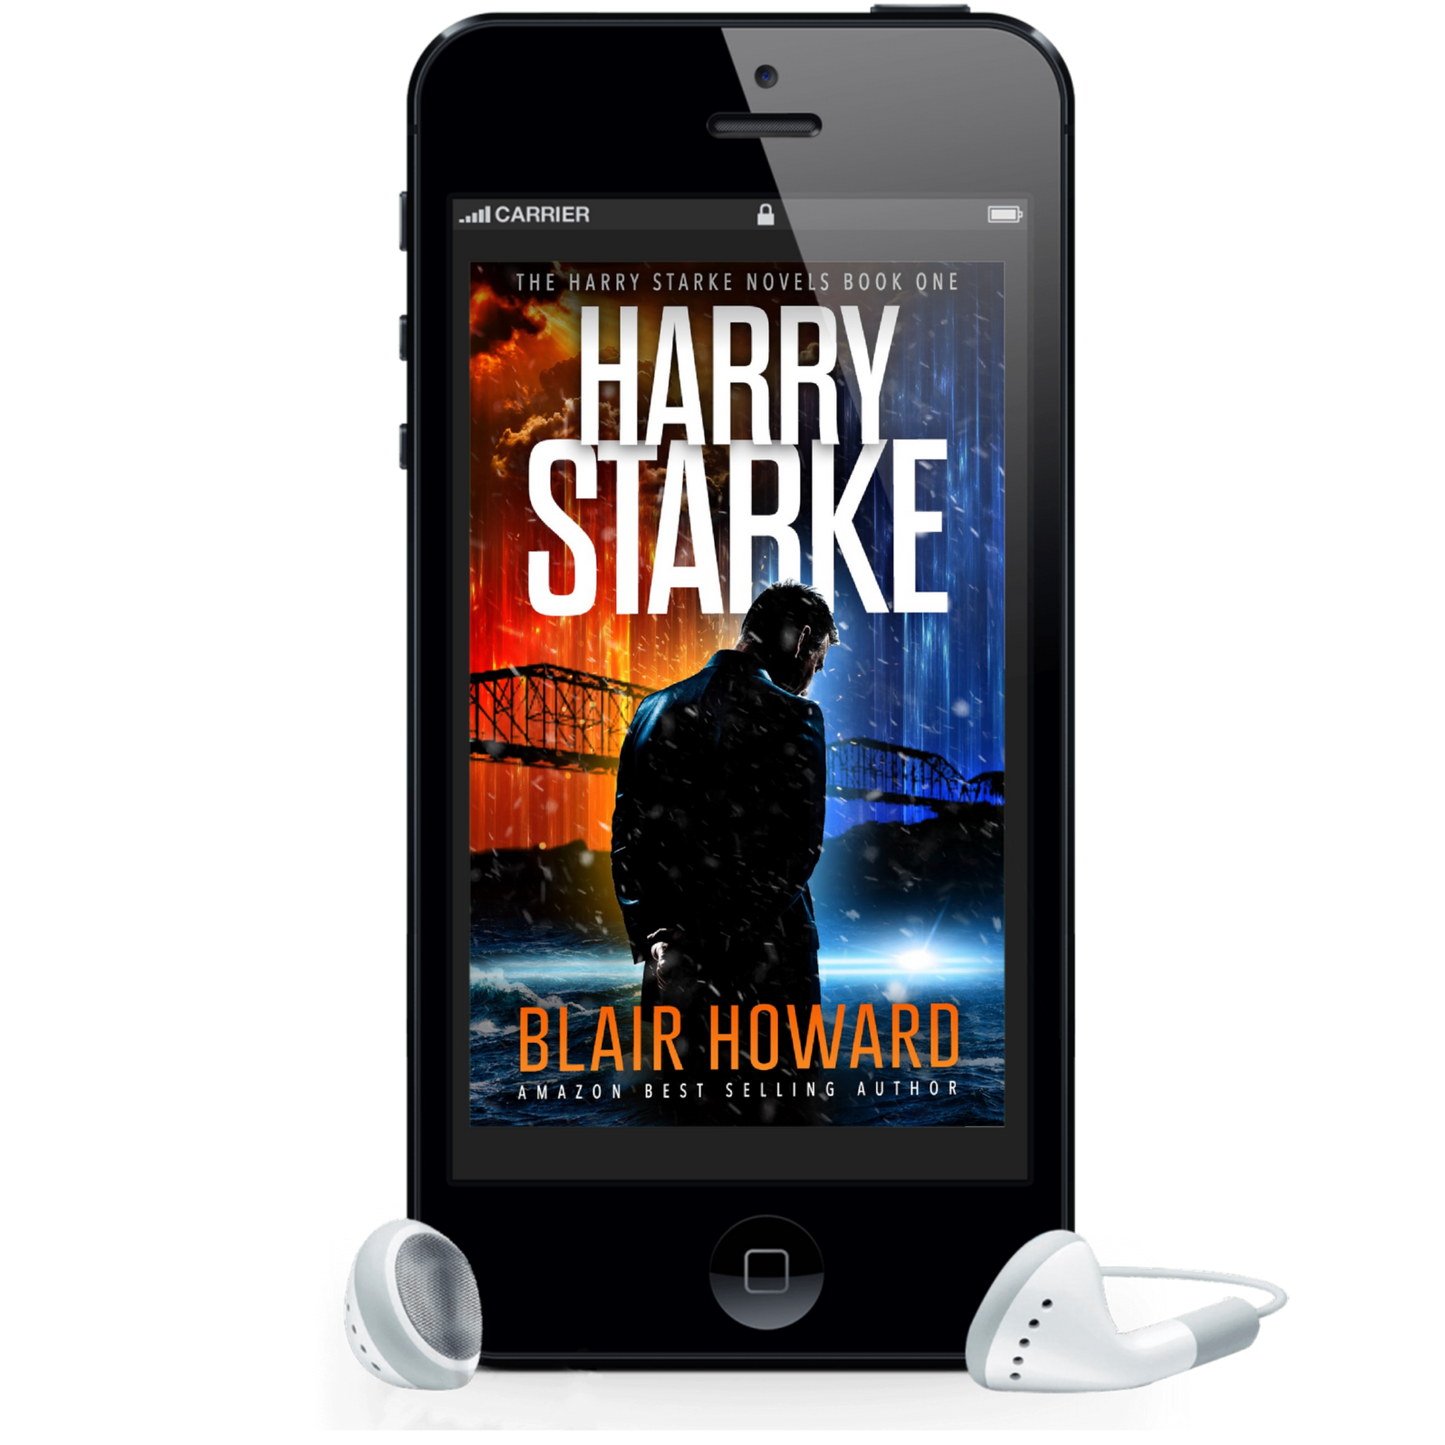 Harry Starke Audiobook(The Harry Starke Novels Book 1)